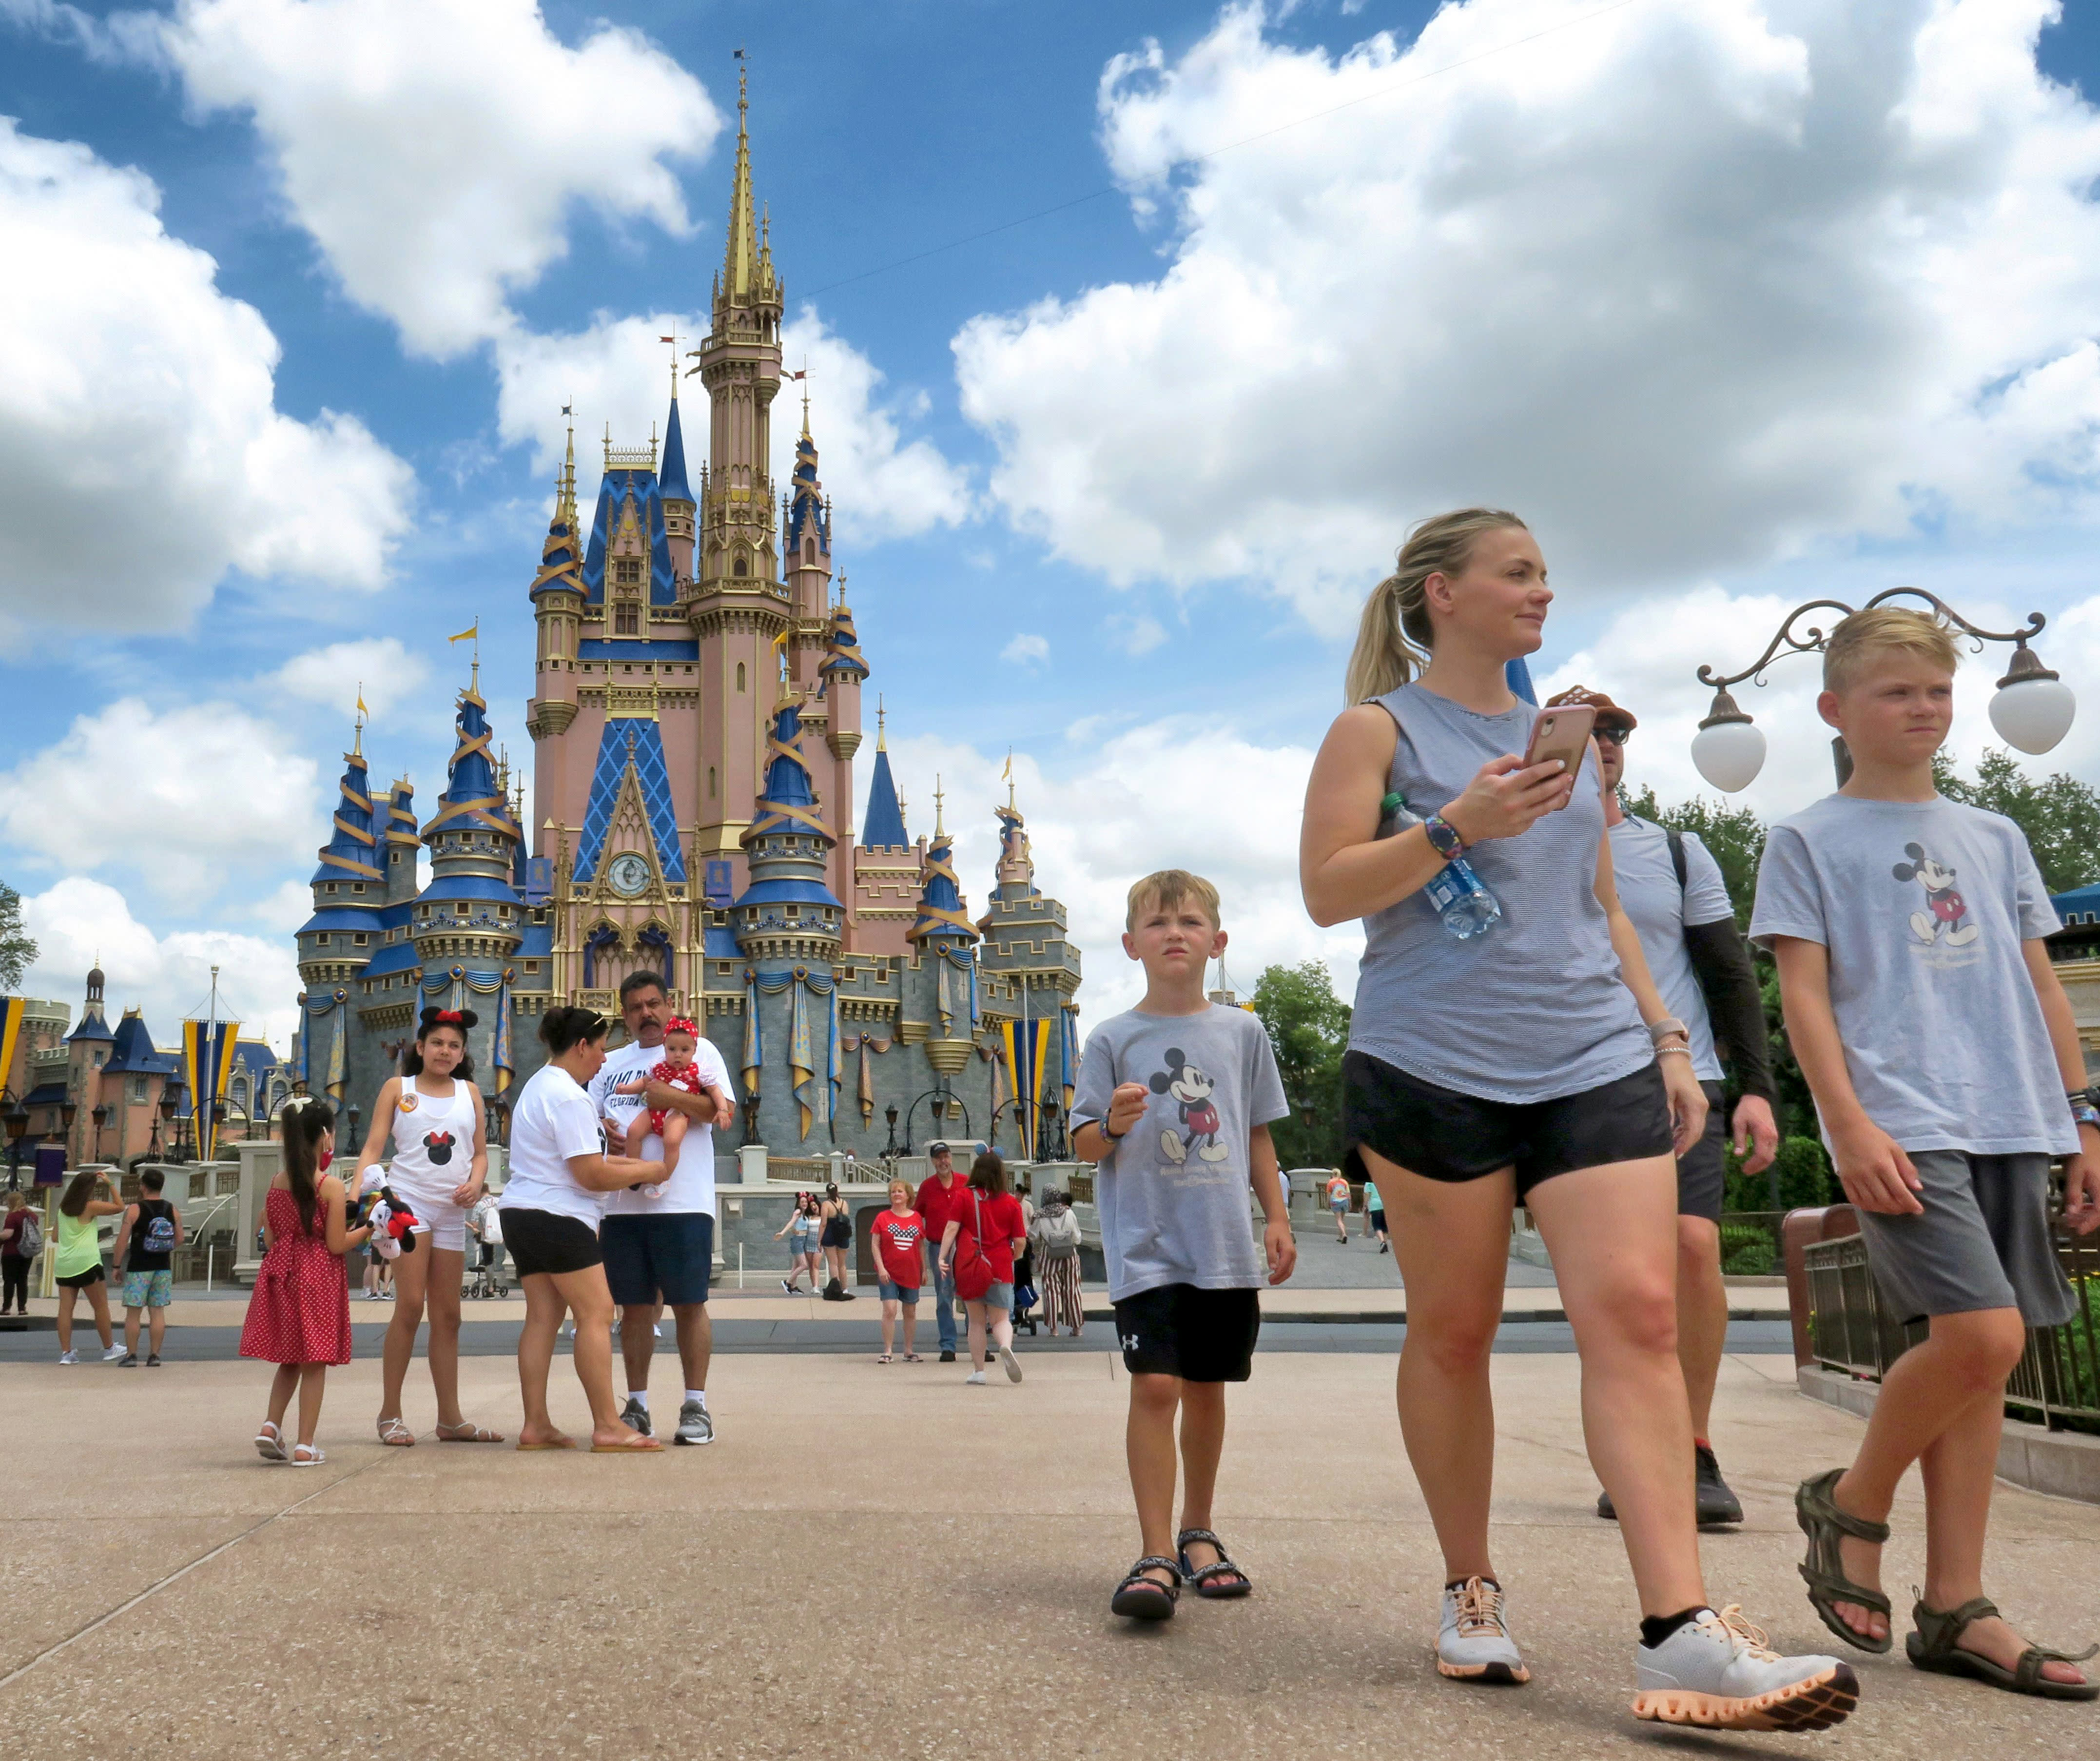 Walt Disney World Announces Updates to Theme Park Reservation System